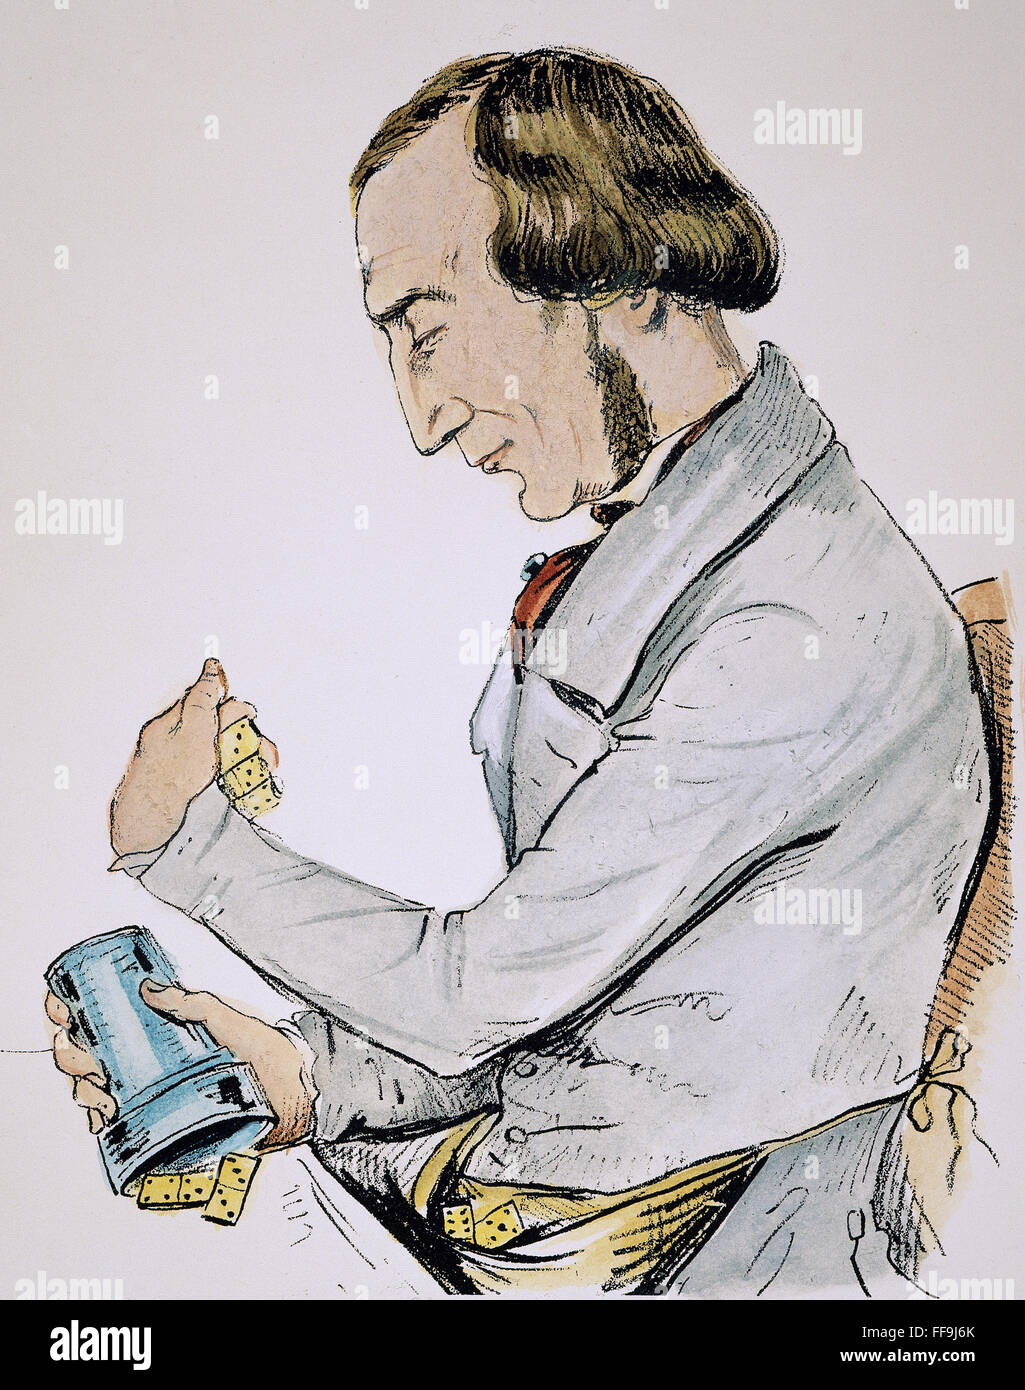 JEAN EUGENE ROBERT HOUDIN. /n(1805-1871). French magician. Lithograph, 1848, by Jean Pierre Dantan (1800-69). Stock Photo